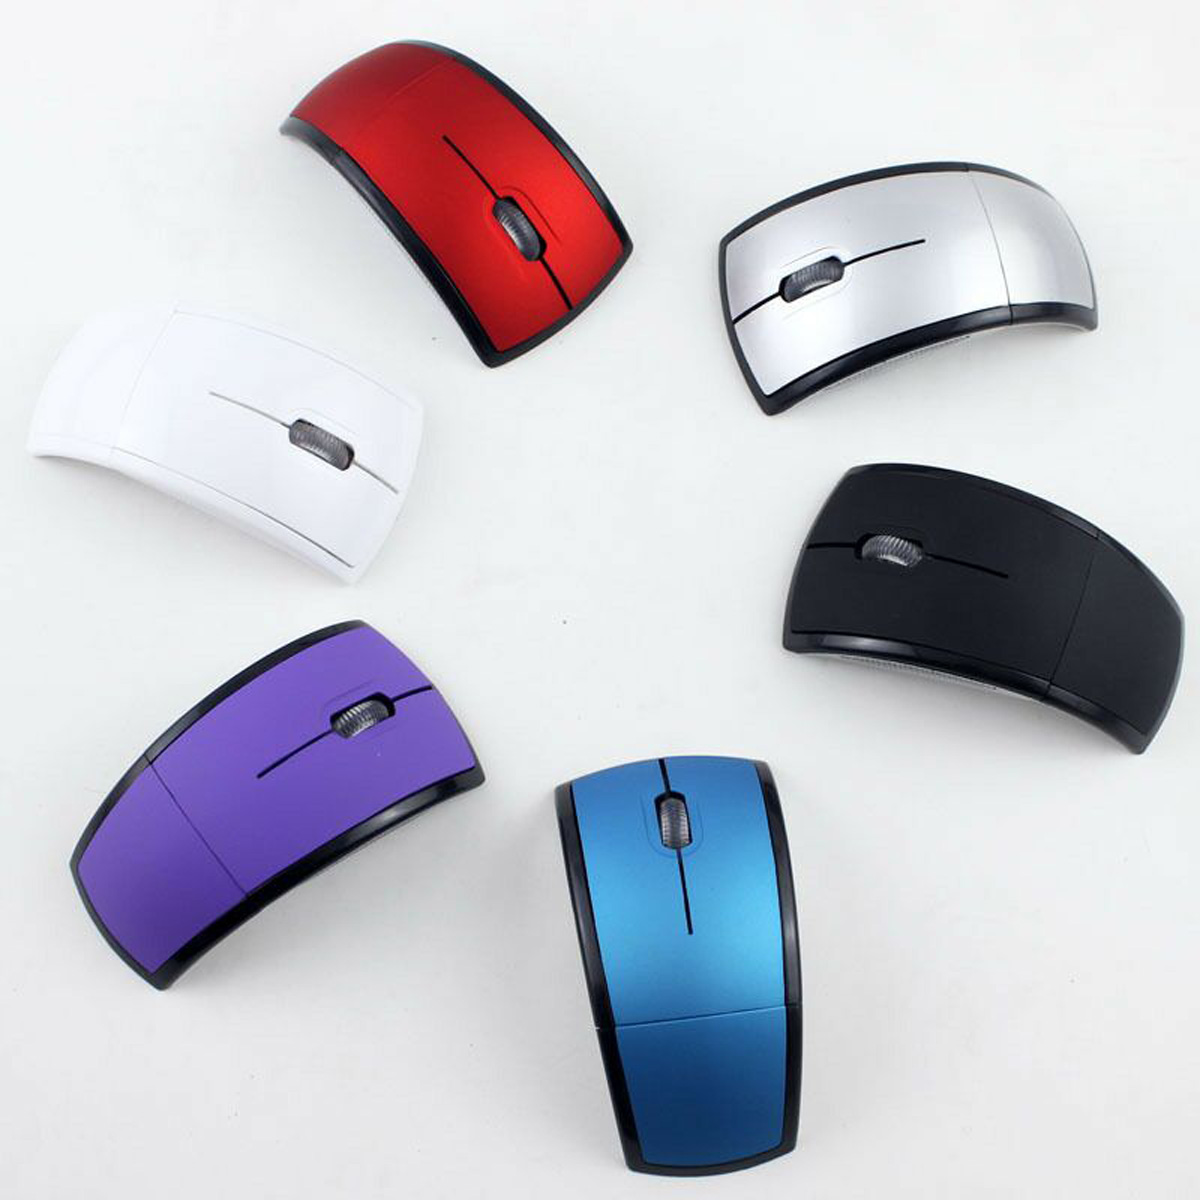 GL-LIZ1001 Wireless Foldable Mouse